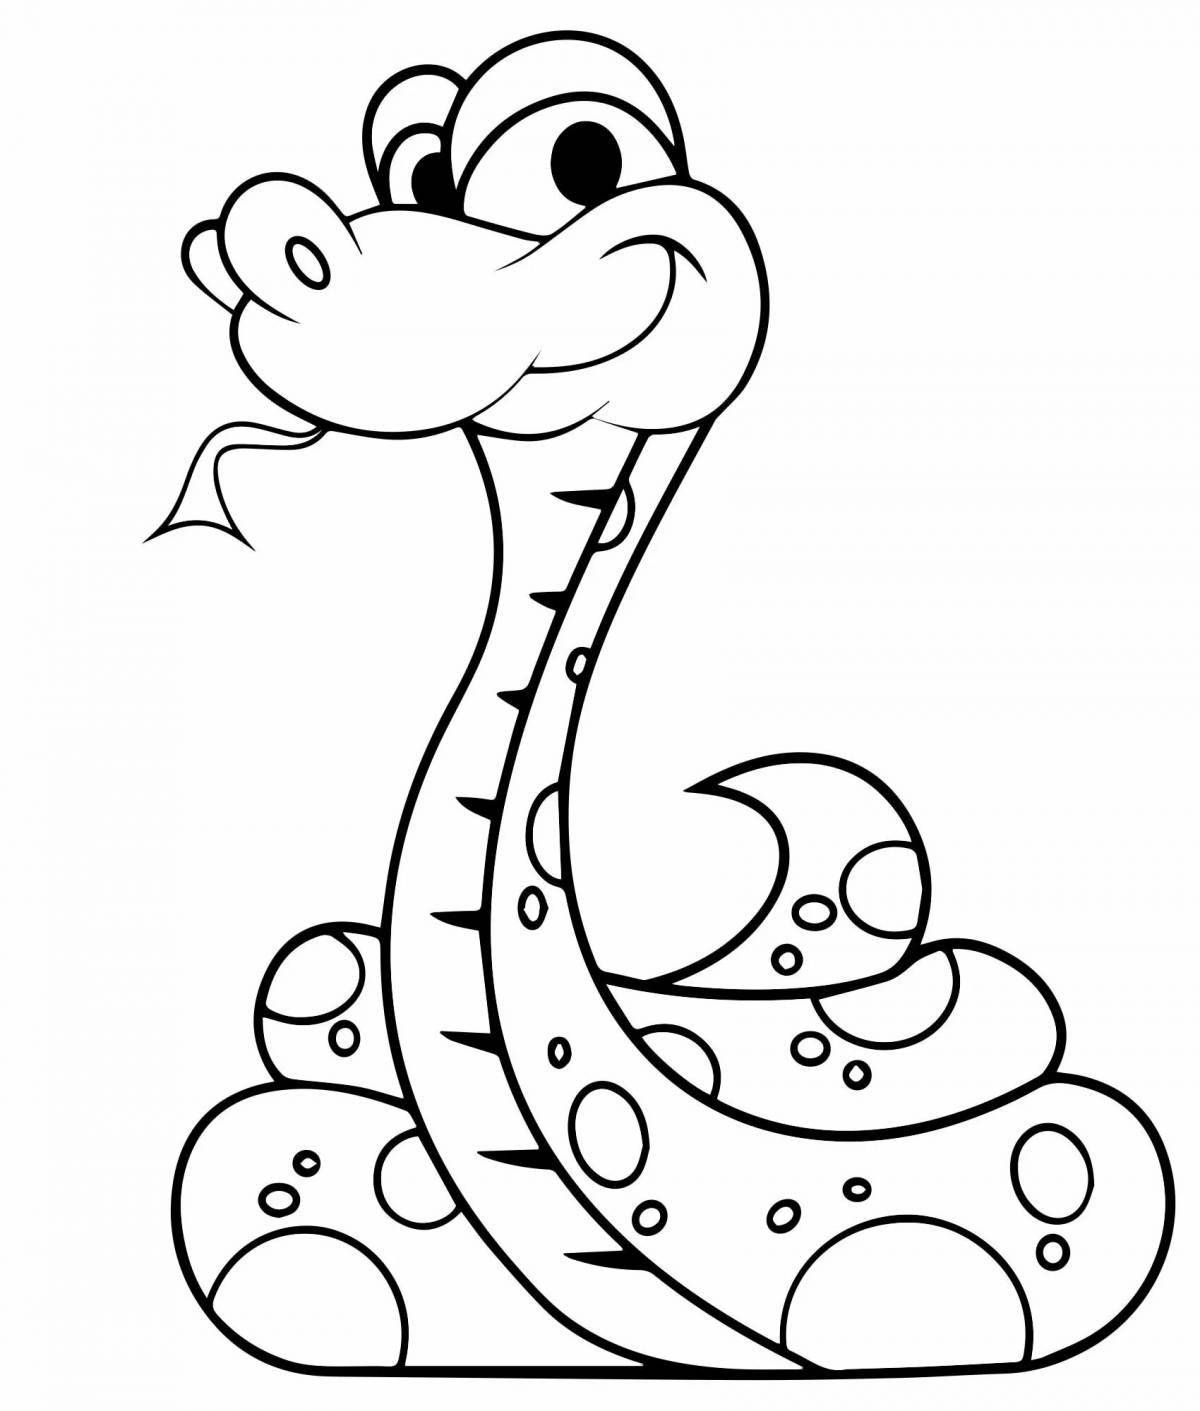 Snake drawing detail page